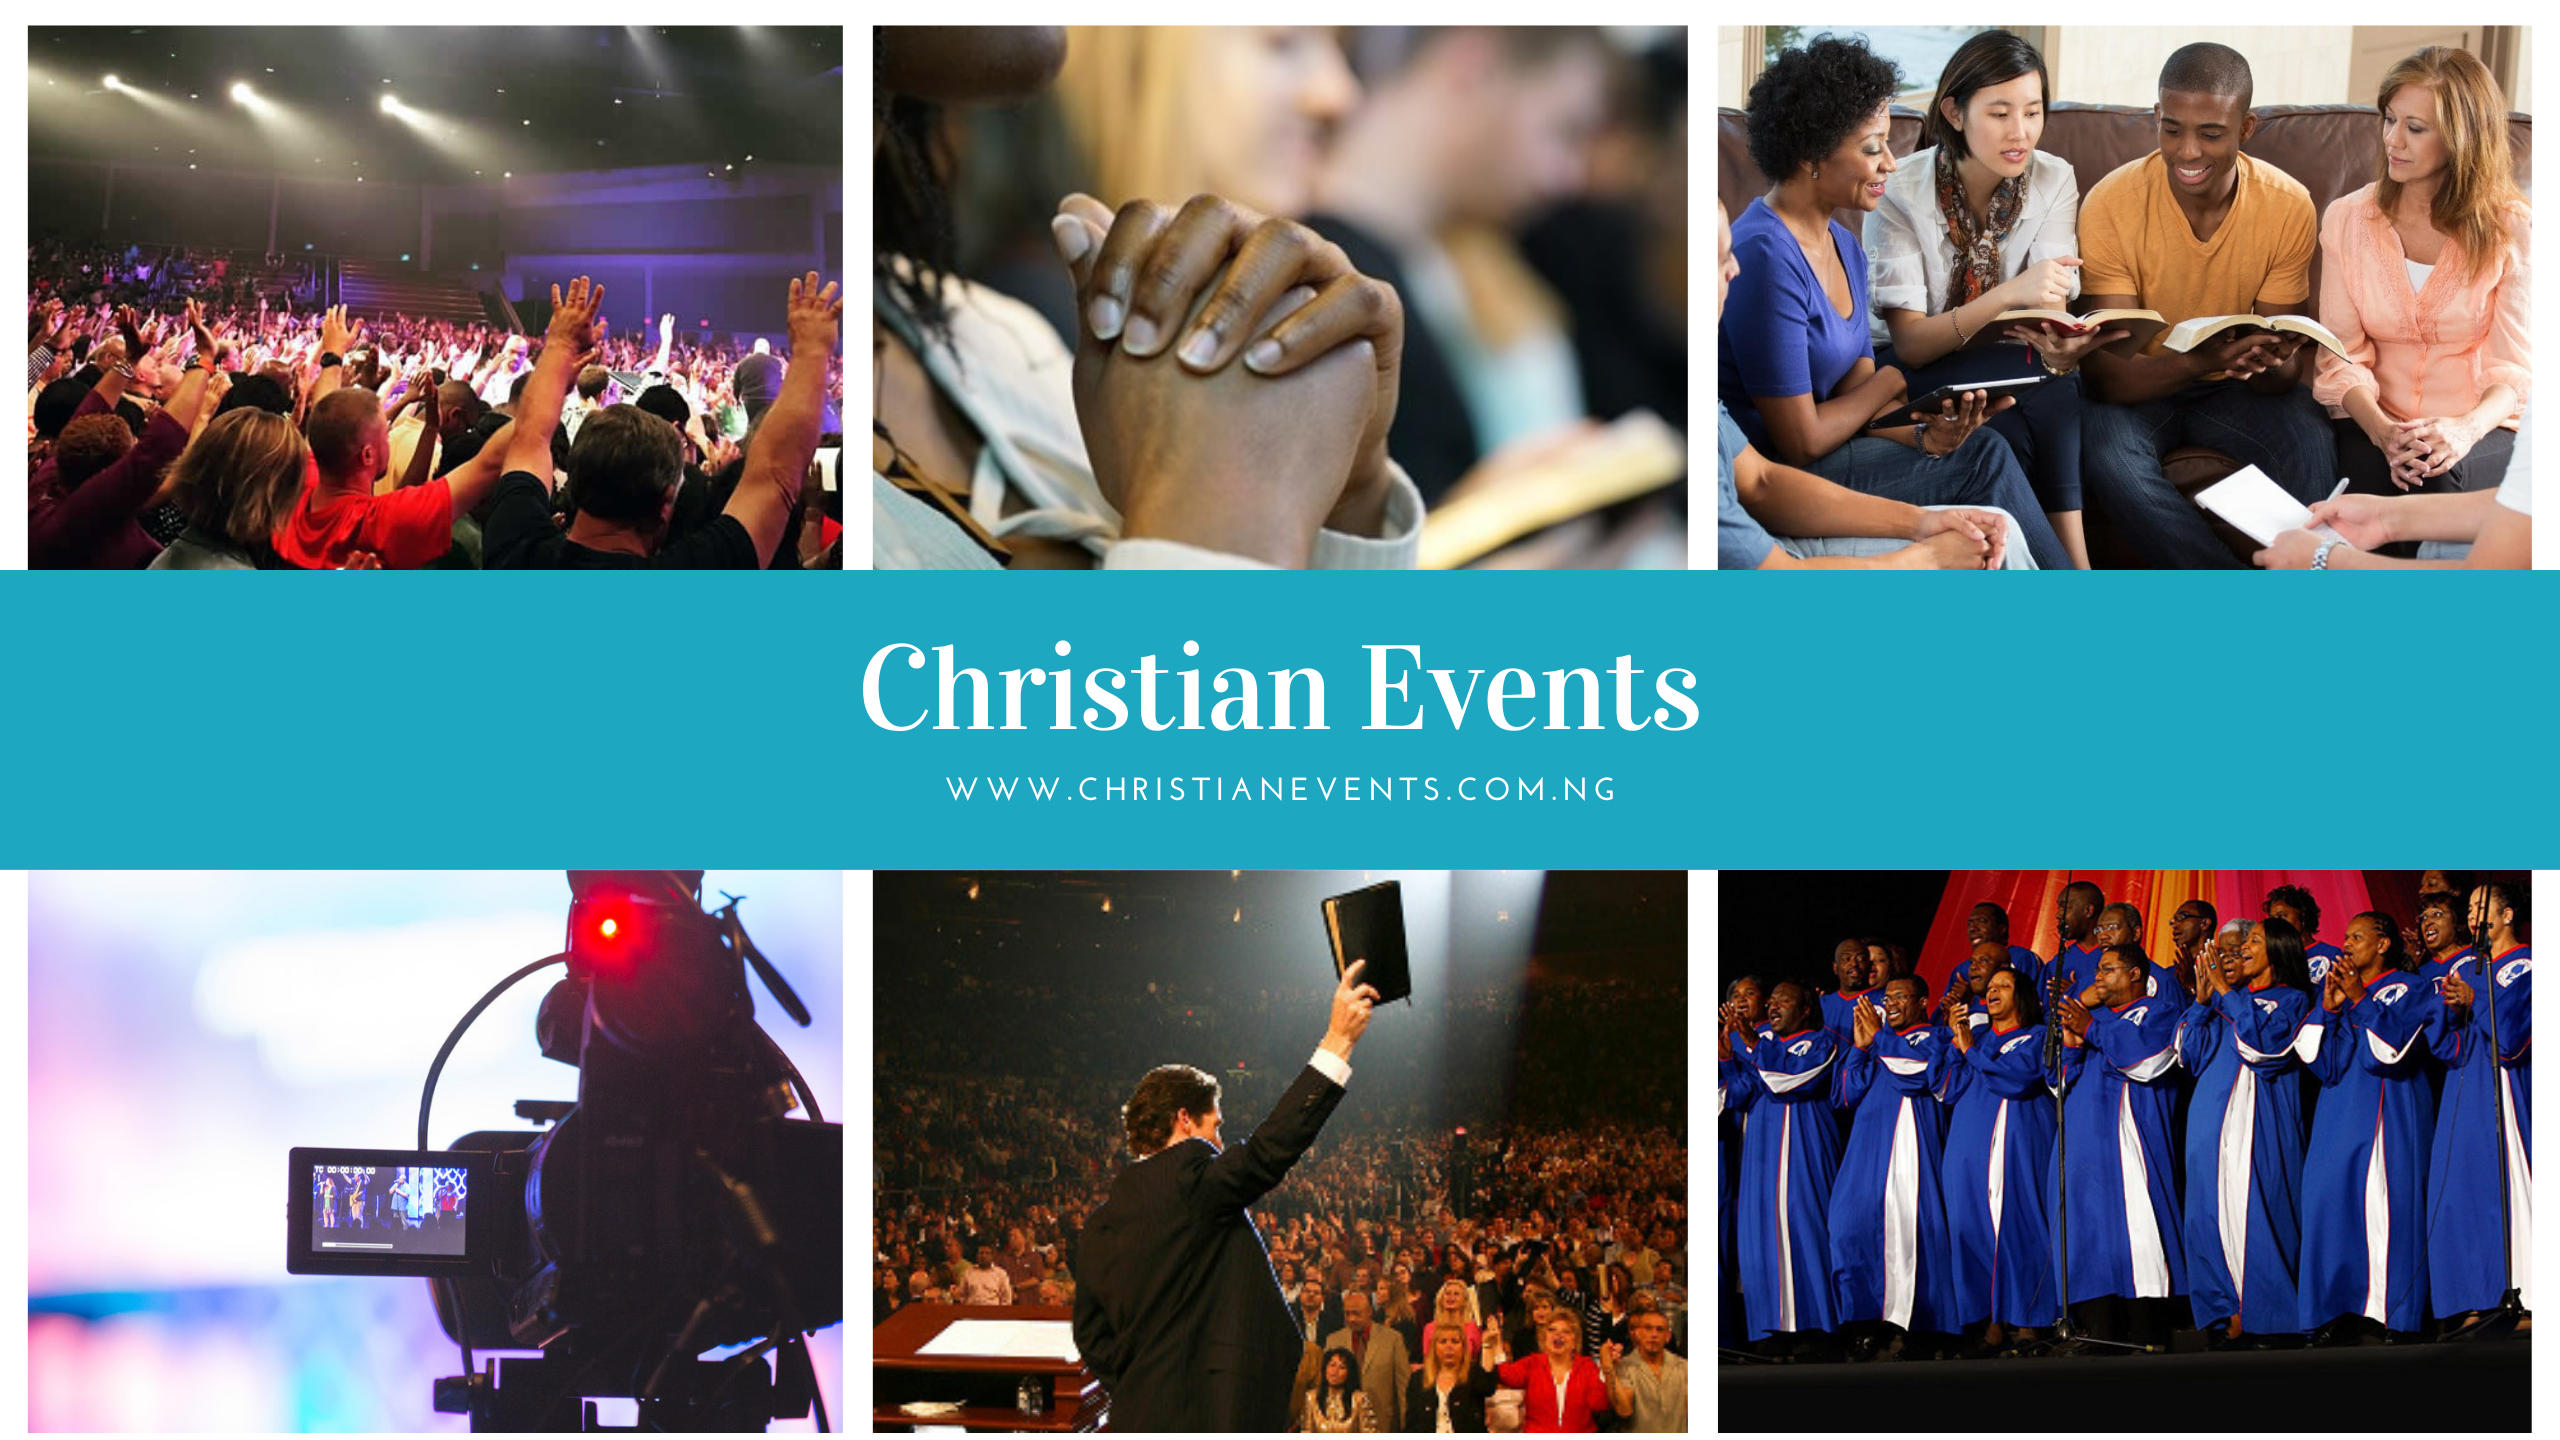 Christian Events Website